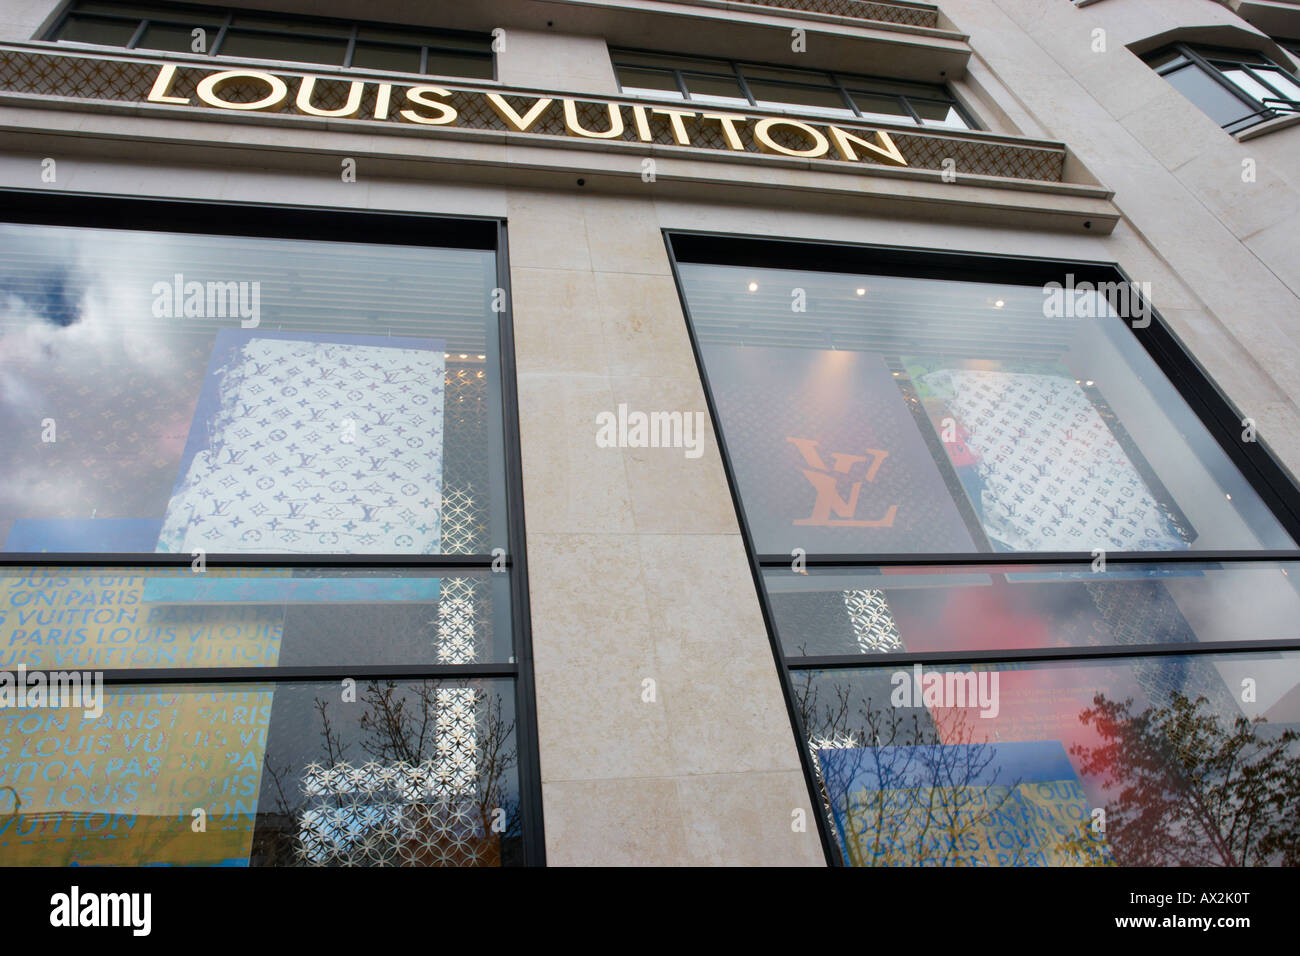 Louis Vuitton shop Parizska street Josefov central Prague Czech Republic  Europe, Stock Photo, Picture And Rights Managed Image. Pic. X4B-1021833